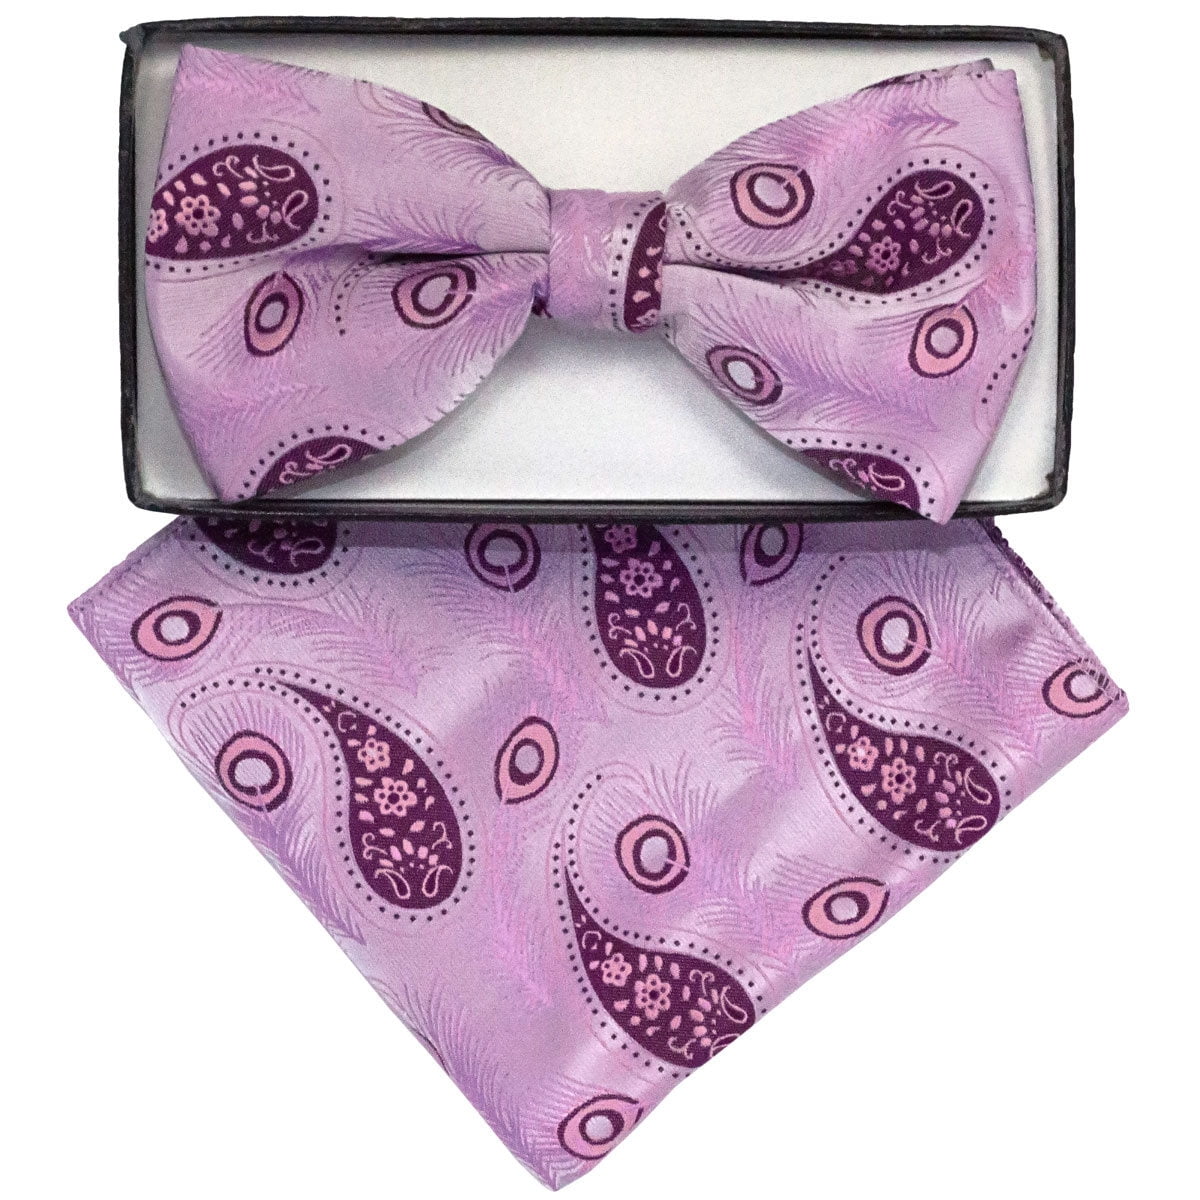 Express Mens Adjustable Bow Tie ~ Floral Print In Multi Color ~ MSRP $49.90 